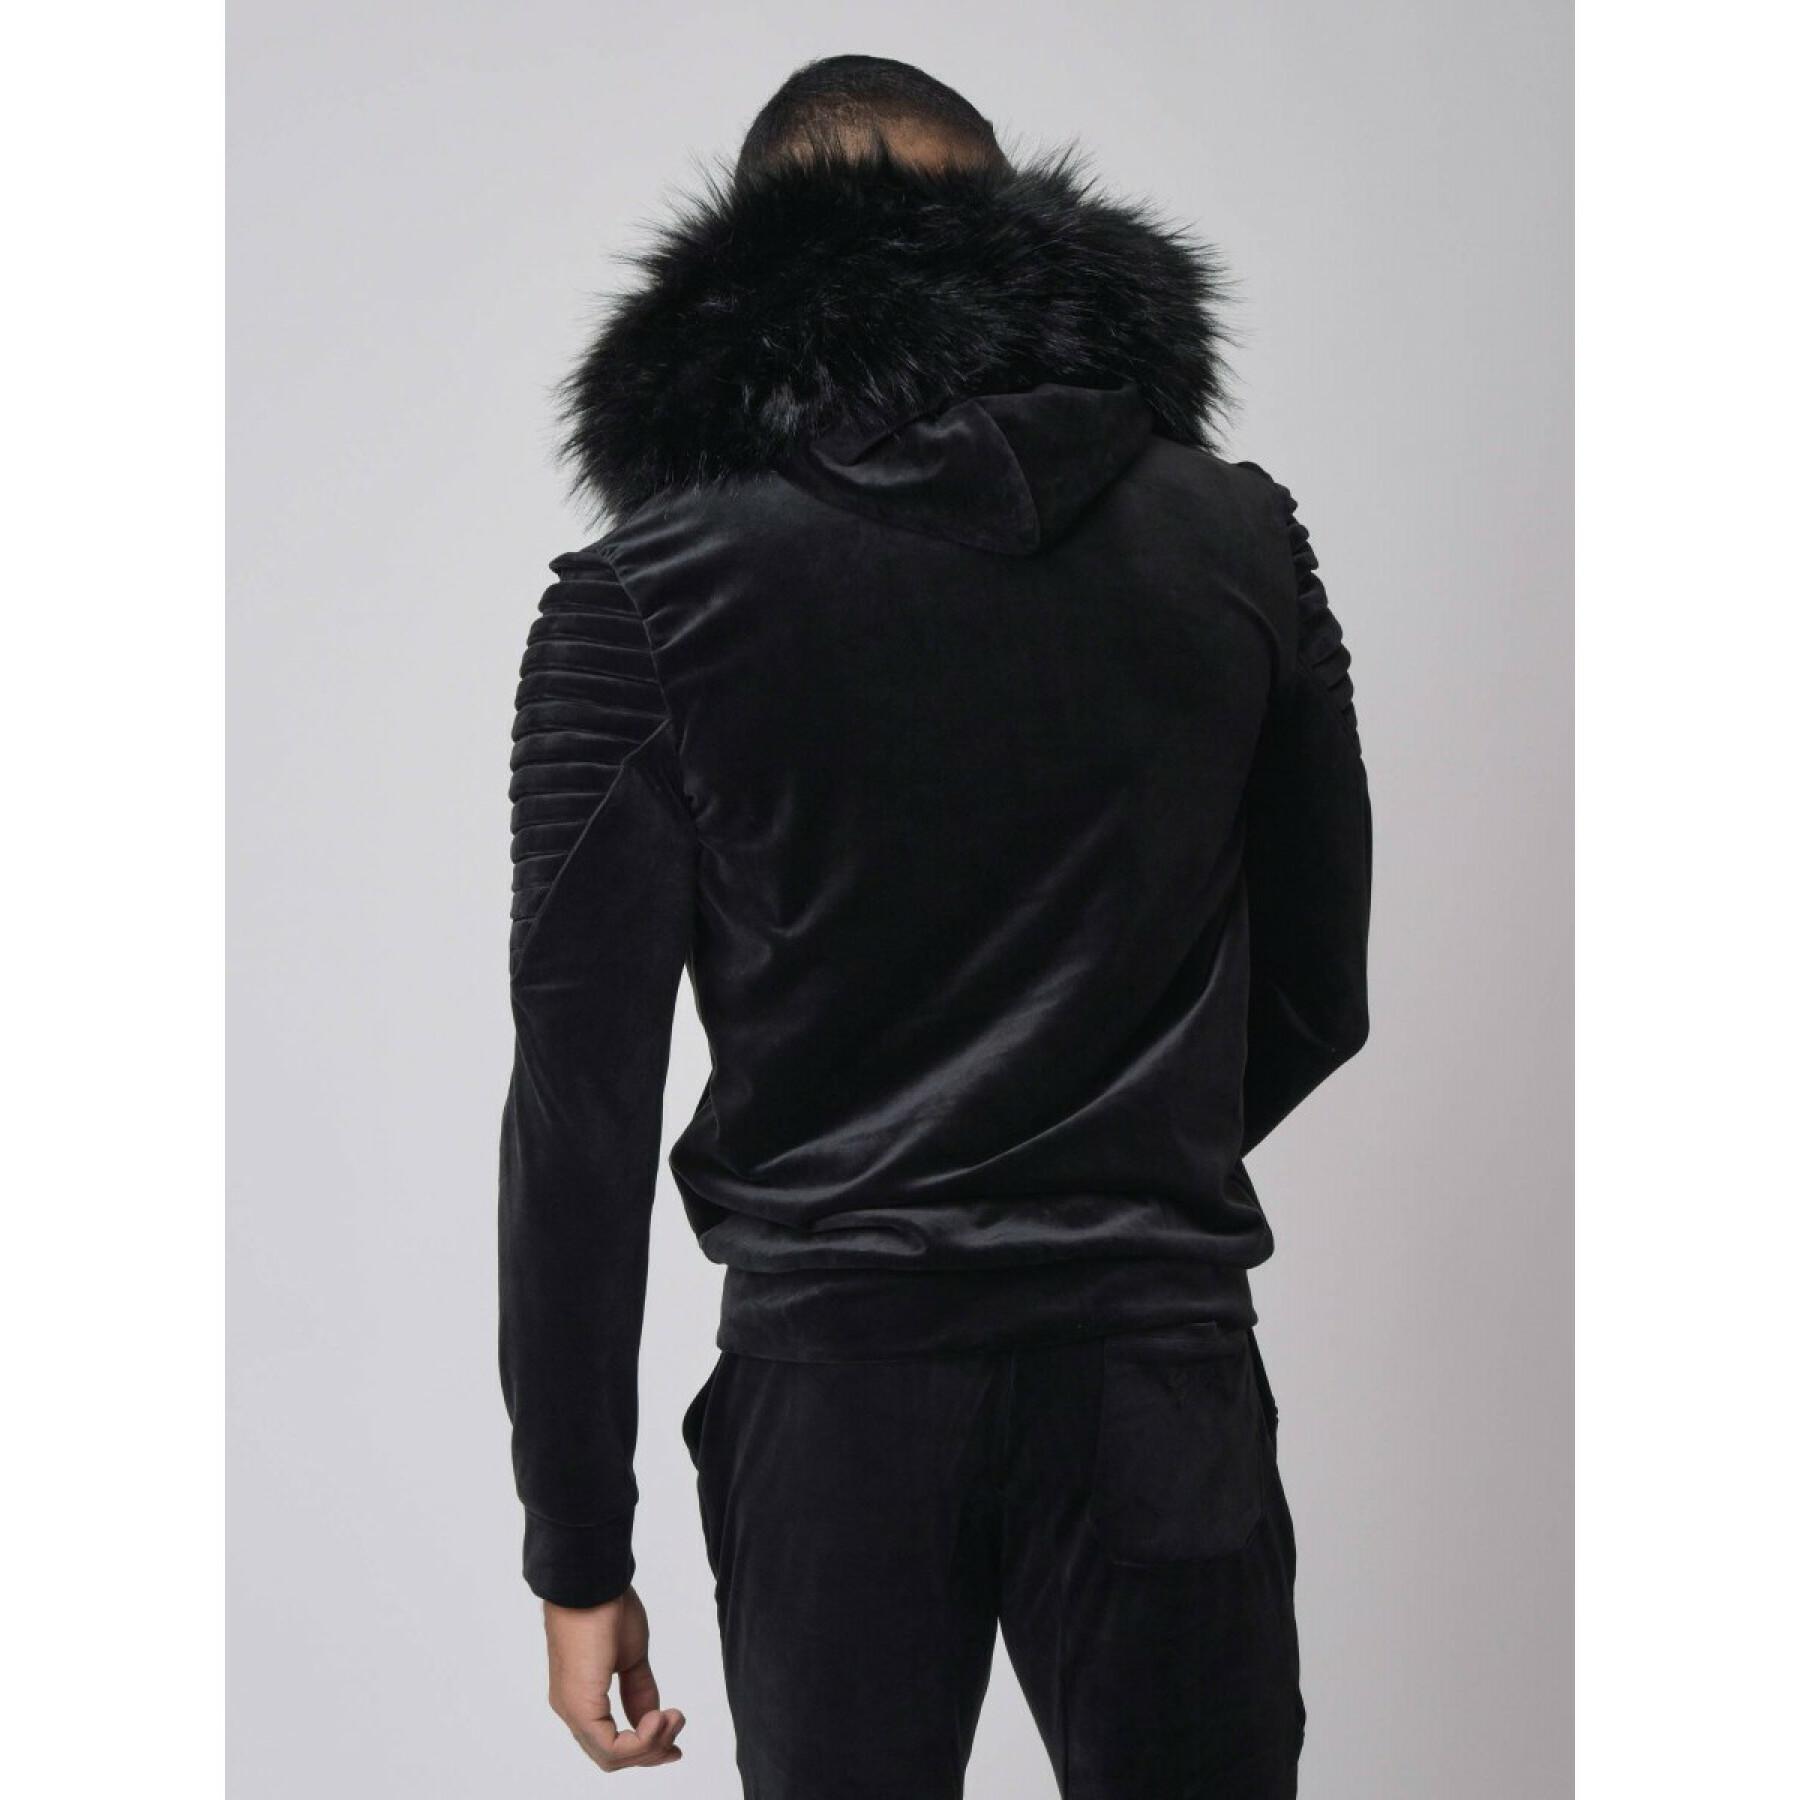 Hooded jacket Project X Paris velvet